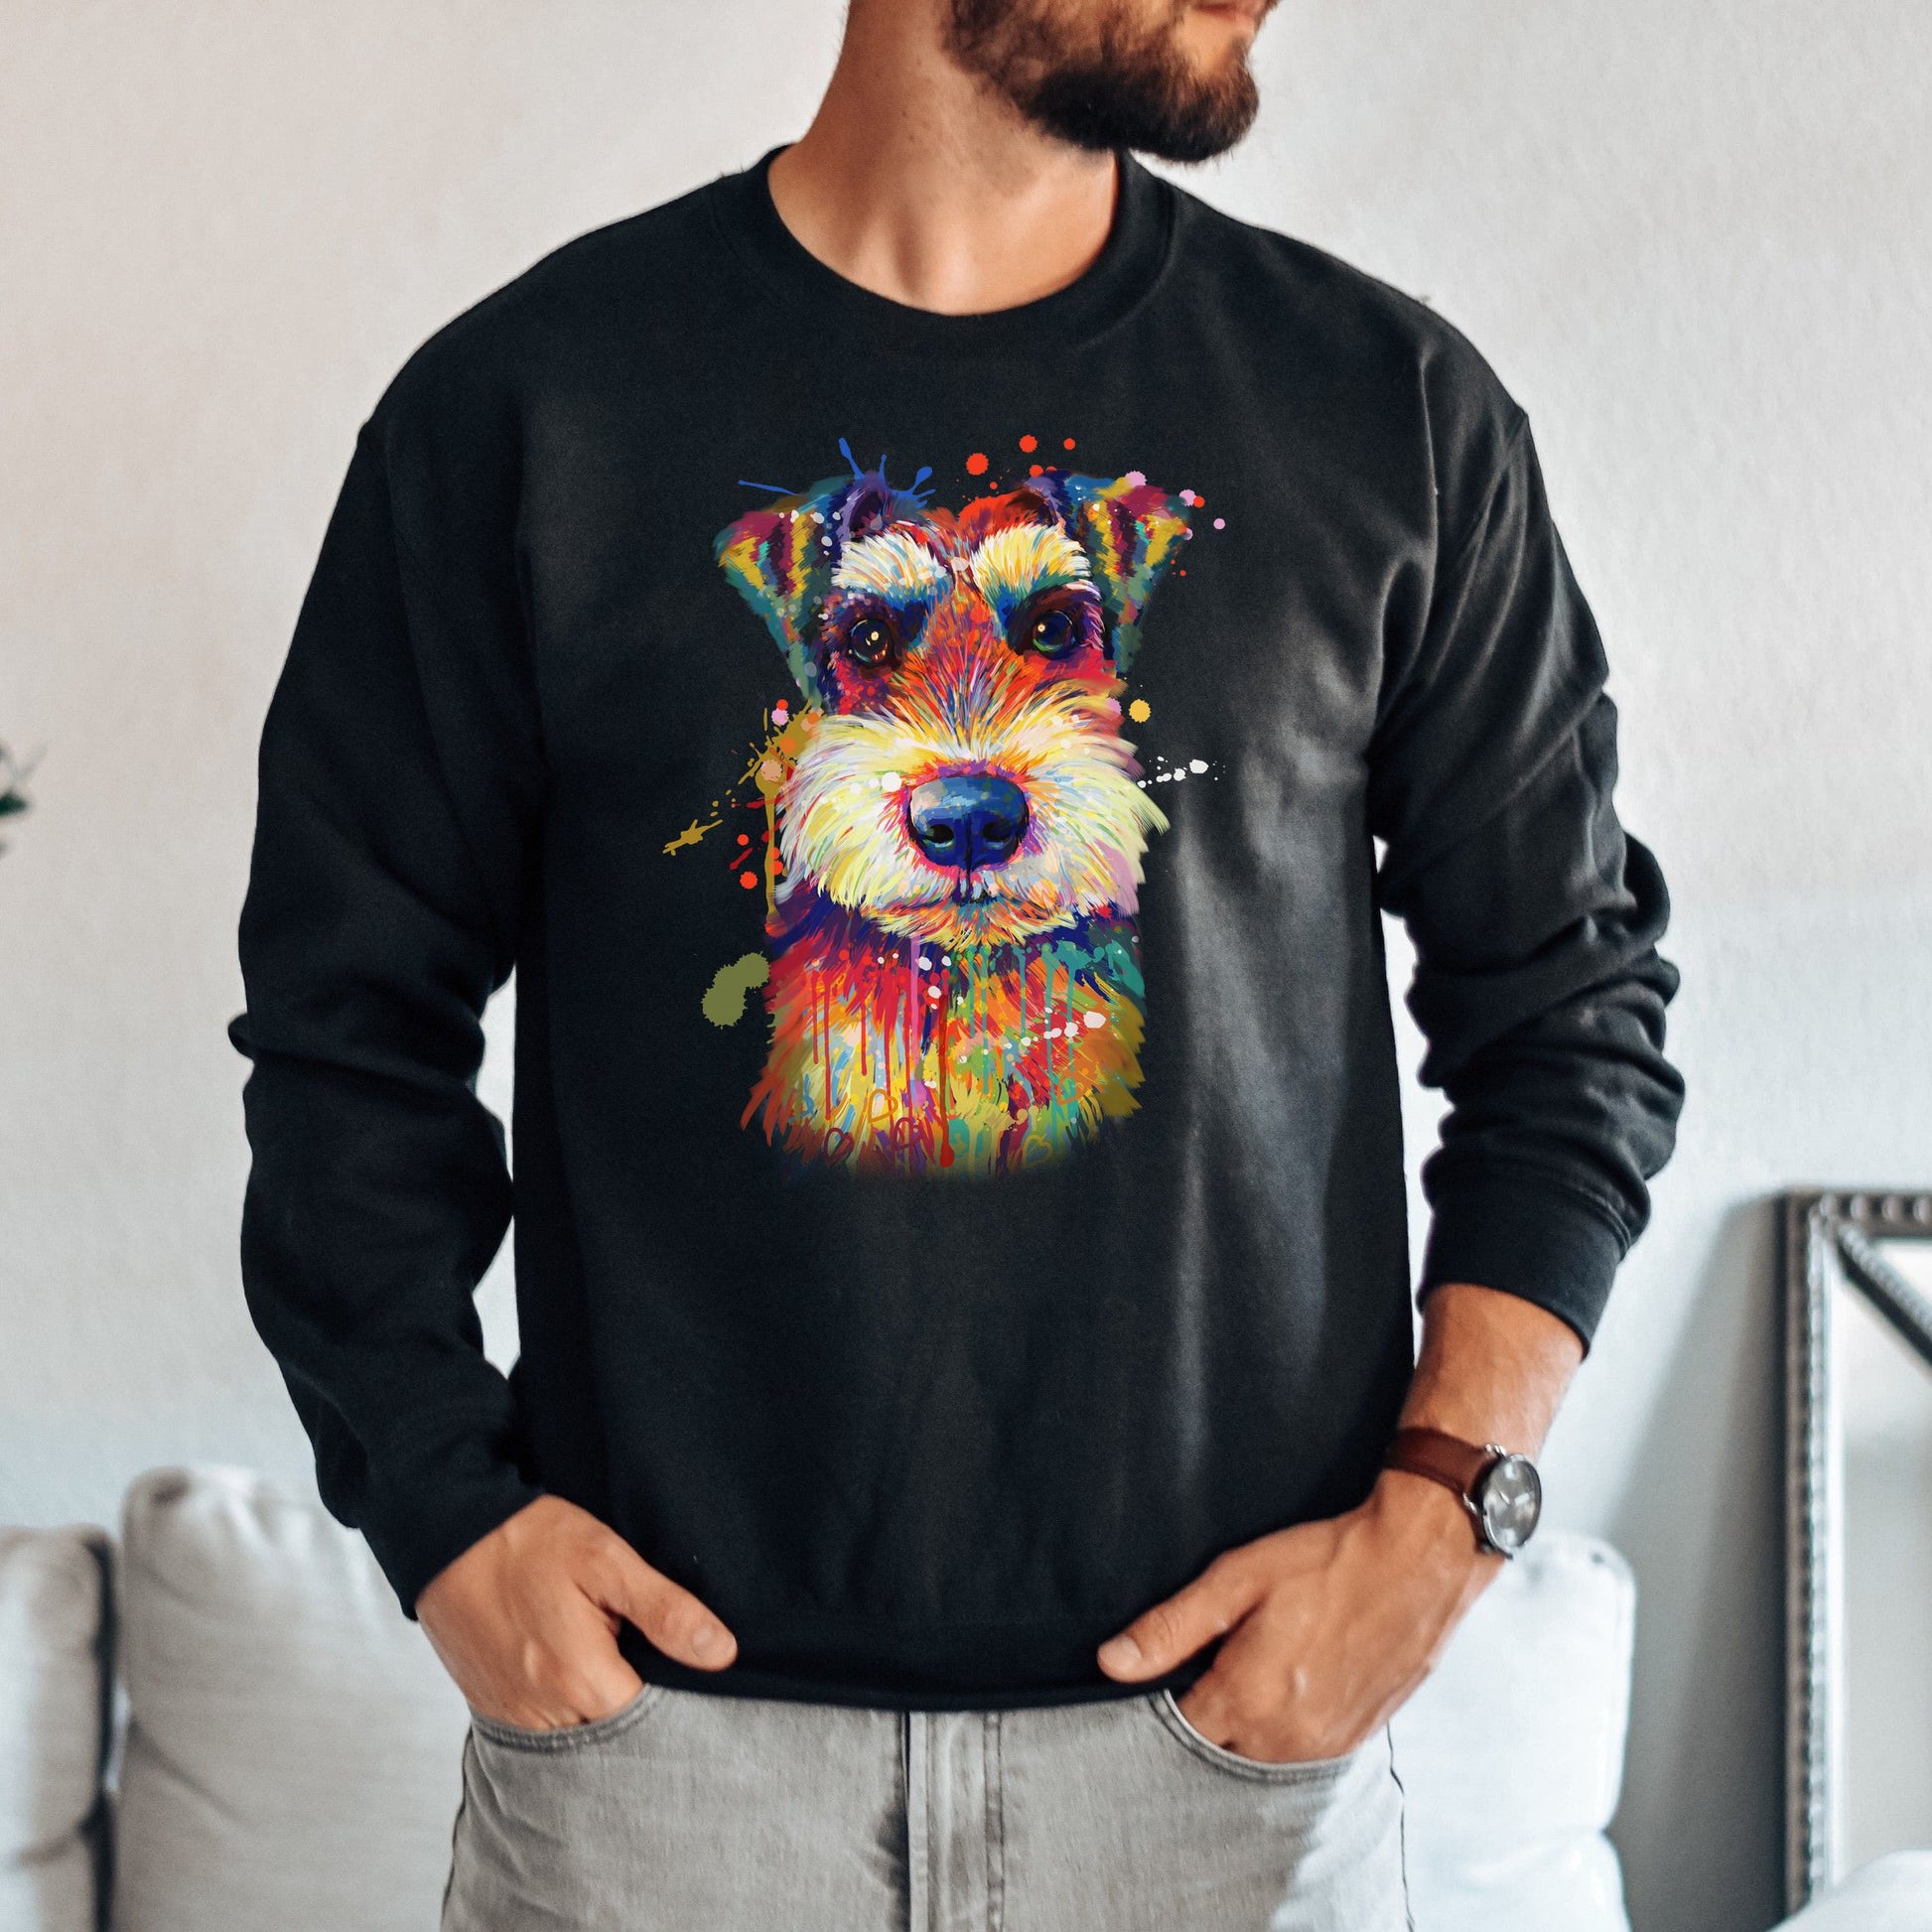 Abstract Schnauzer dog Unisex Crewneck Sweatshirt with expressive splashes-Family-Gift-Planet